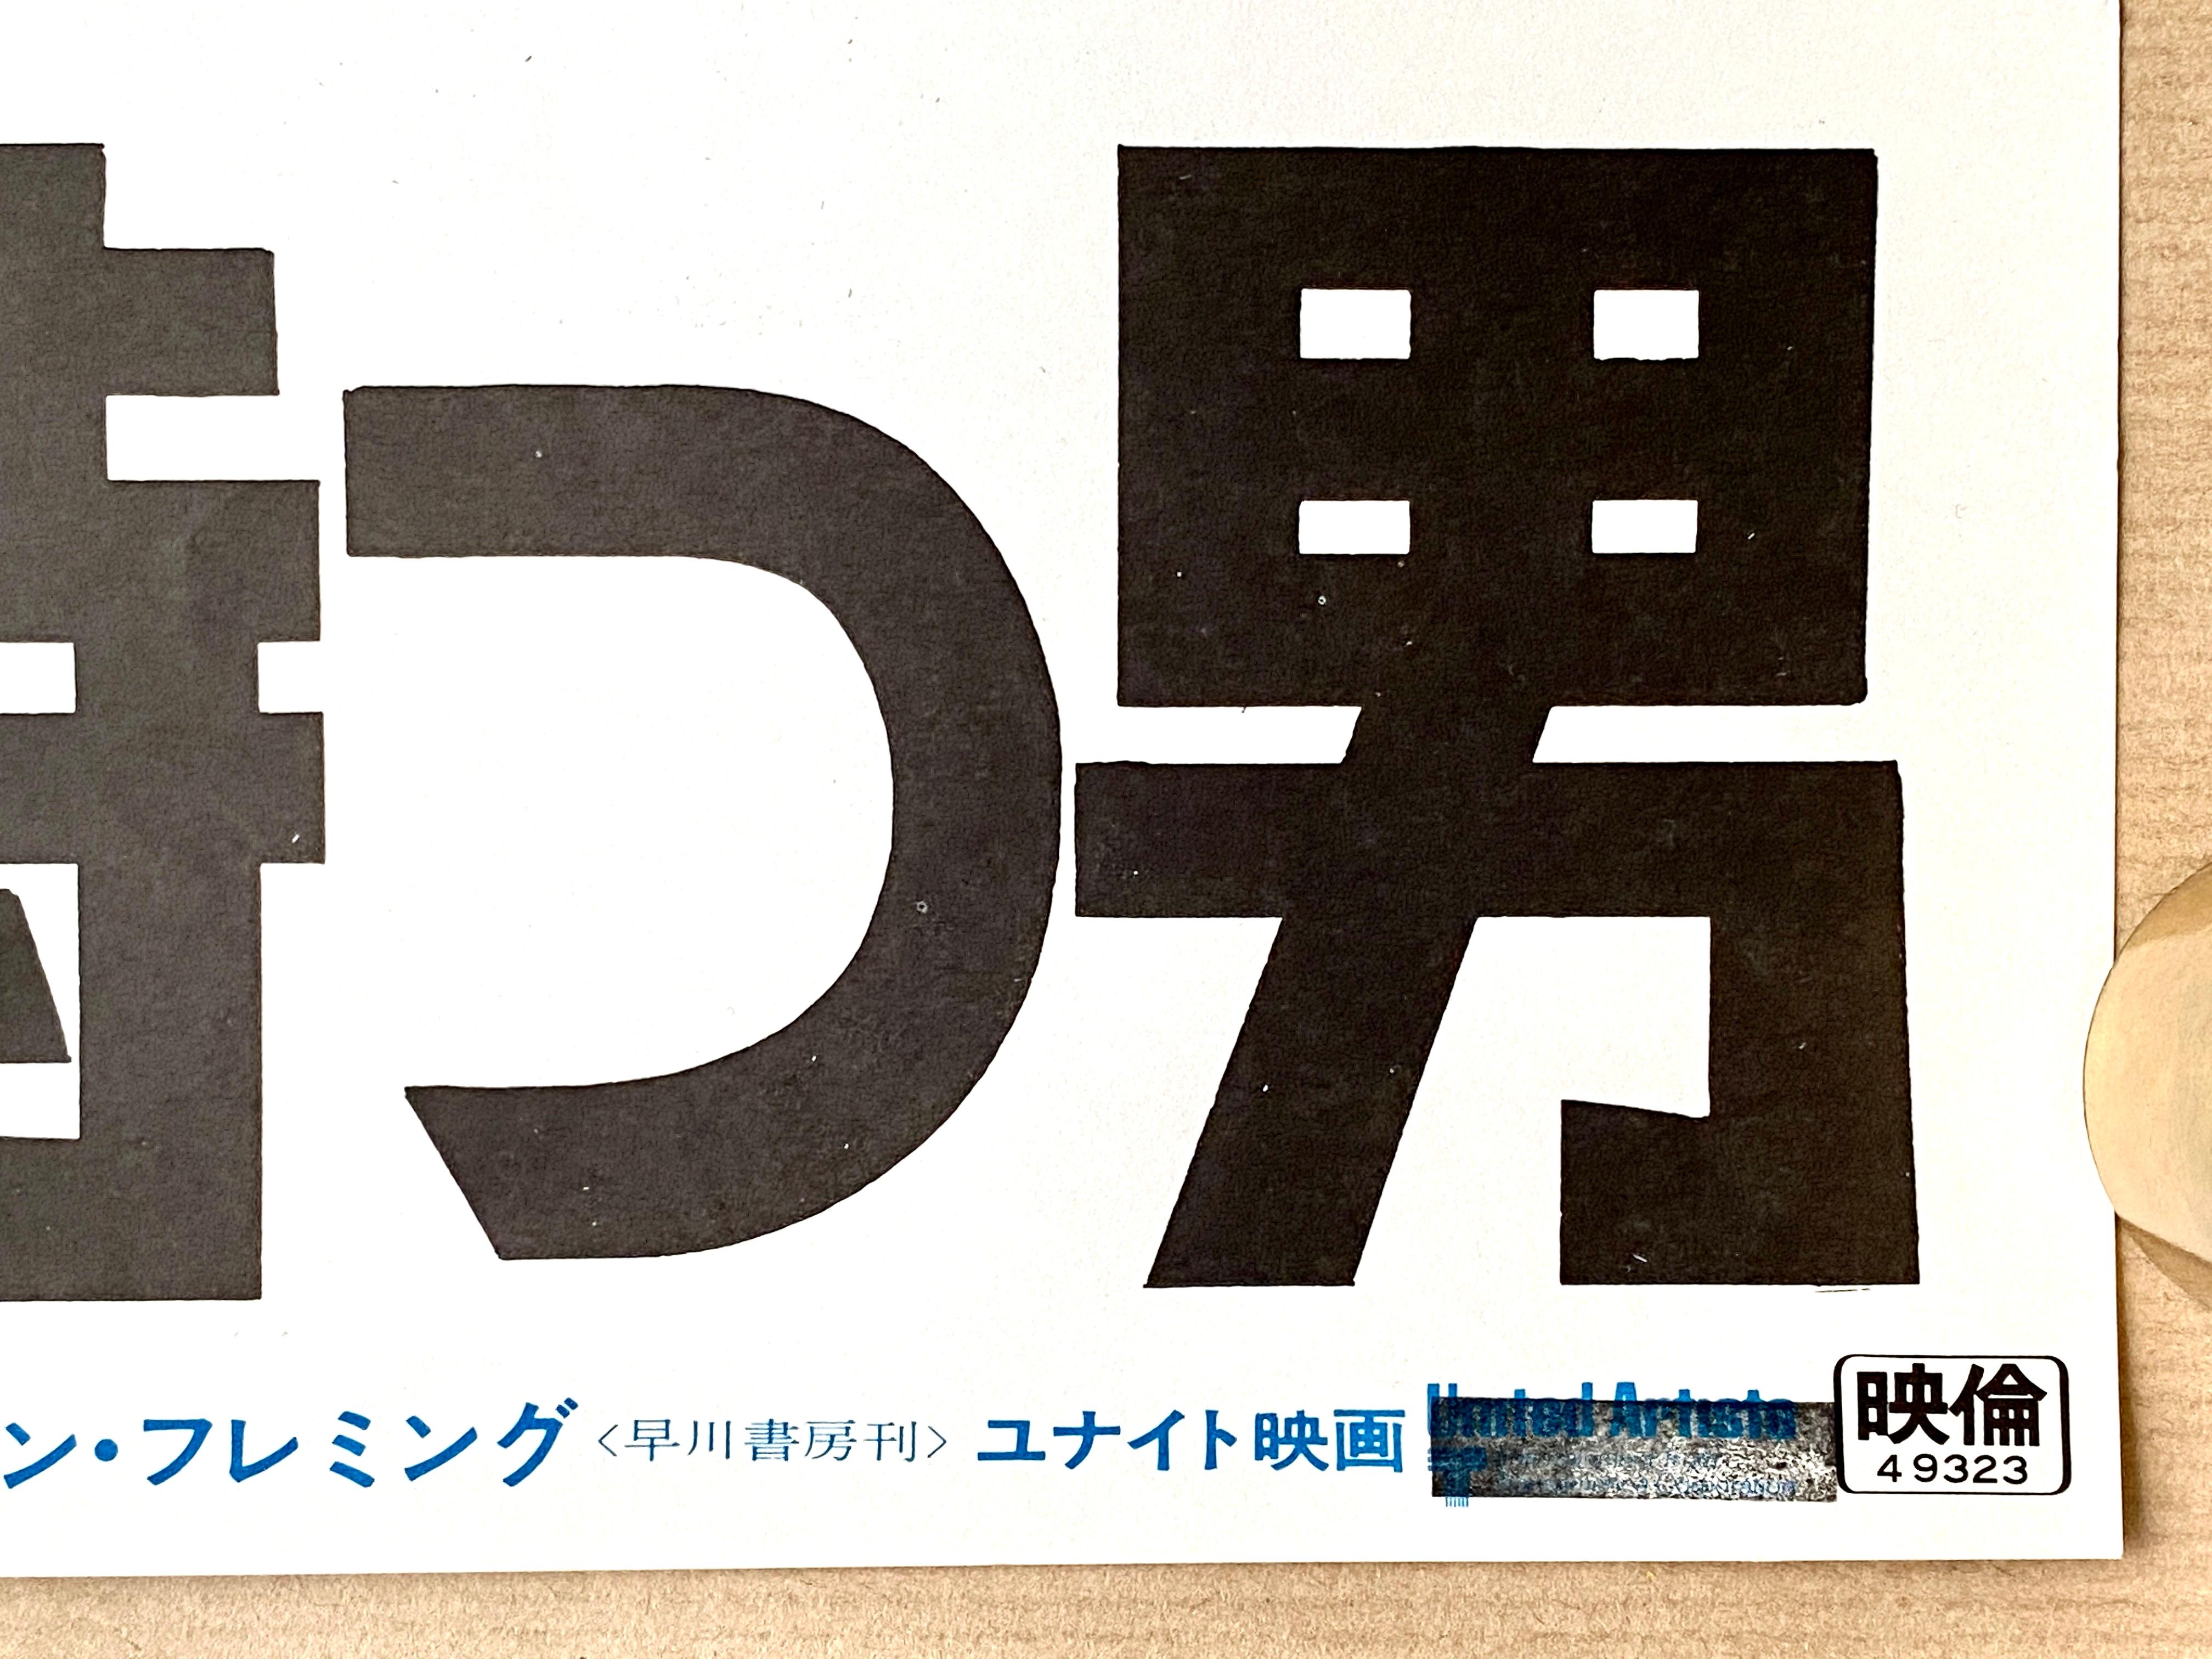 James Bond 'The Man with the Golden Gun' Original Movie Poster, Japanese, 1974 2